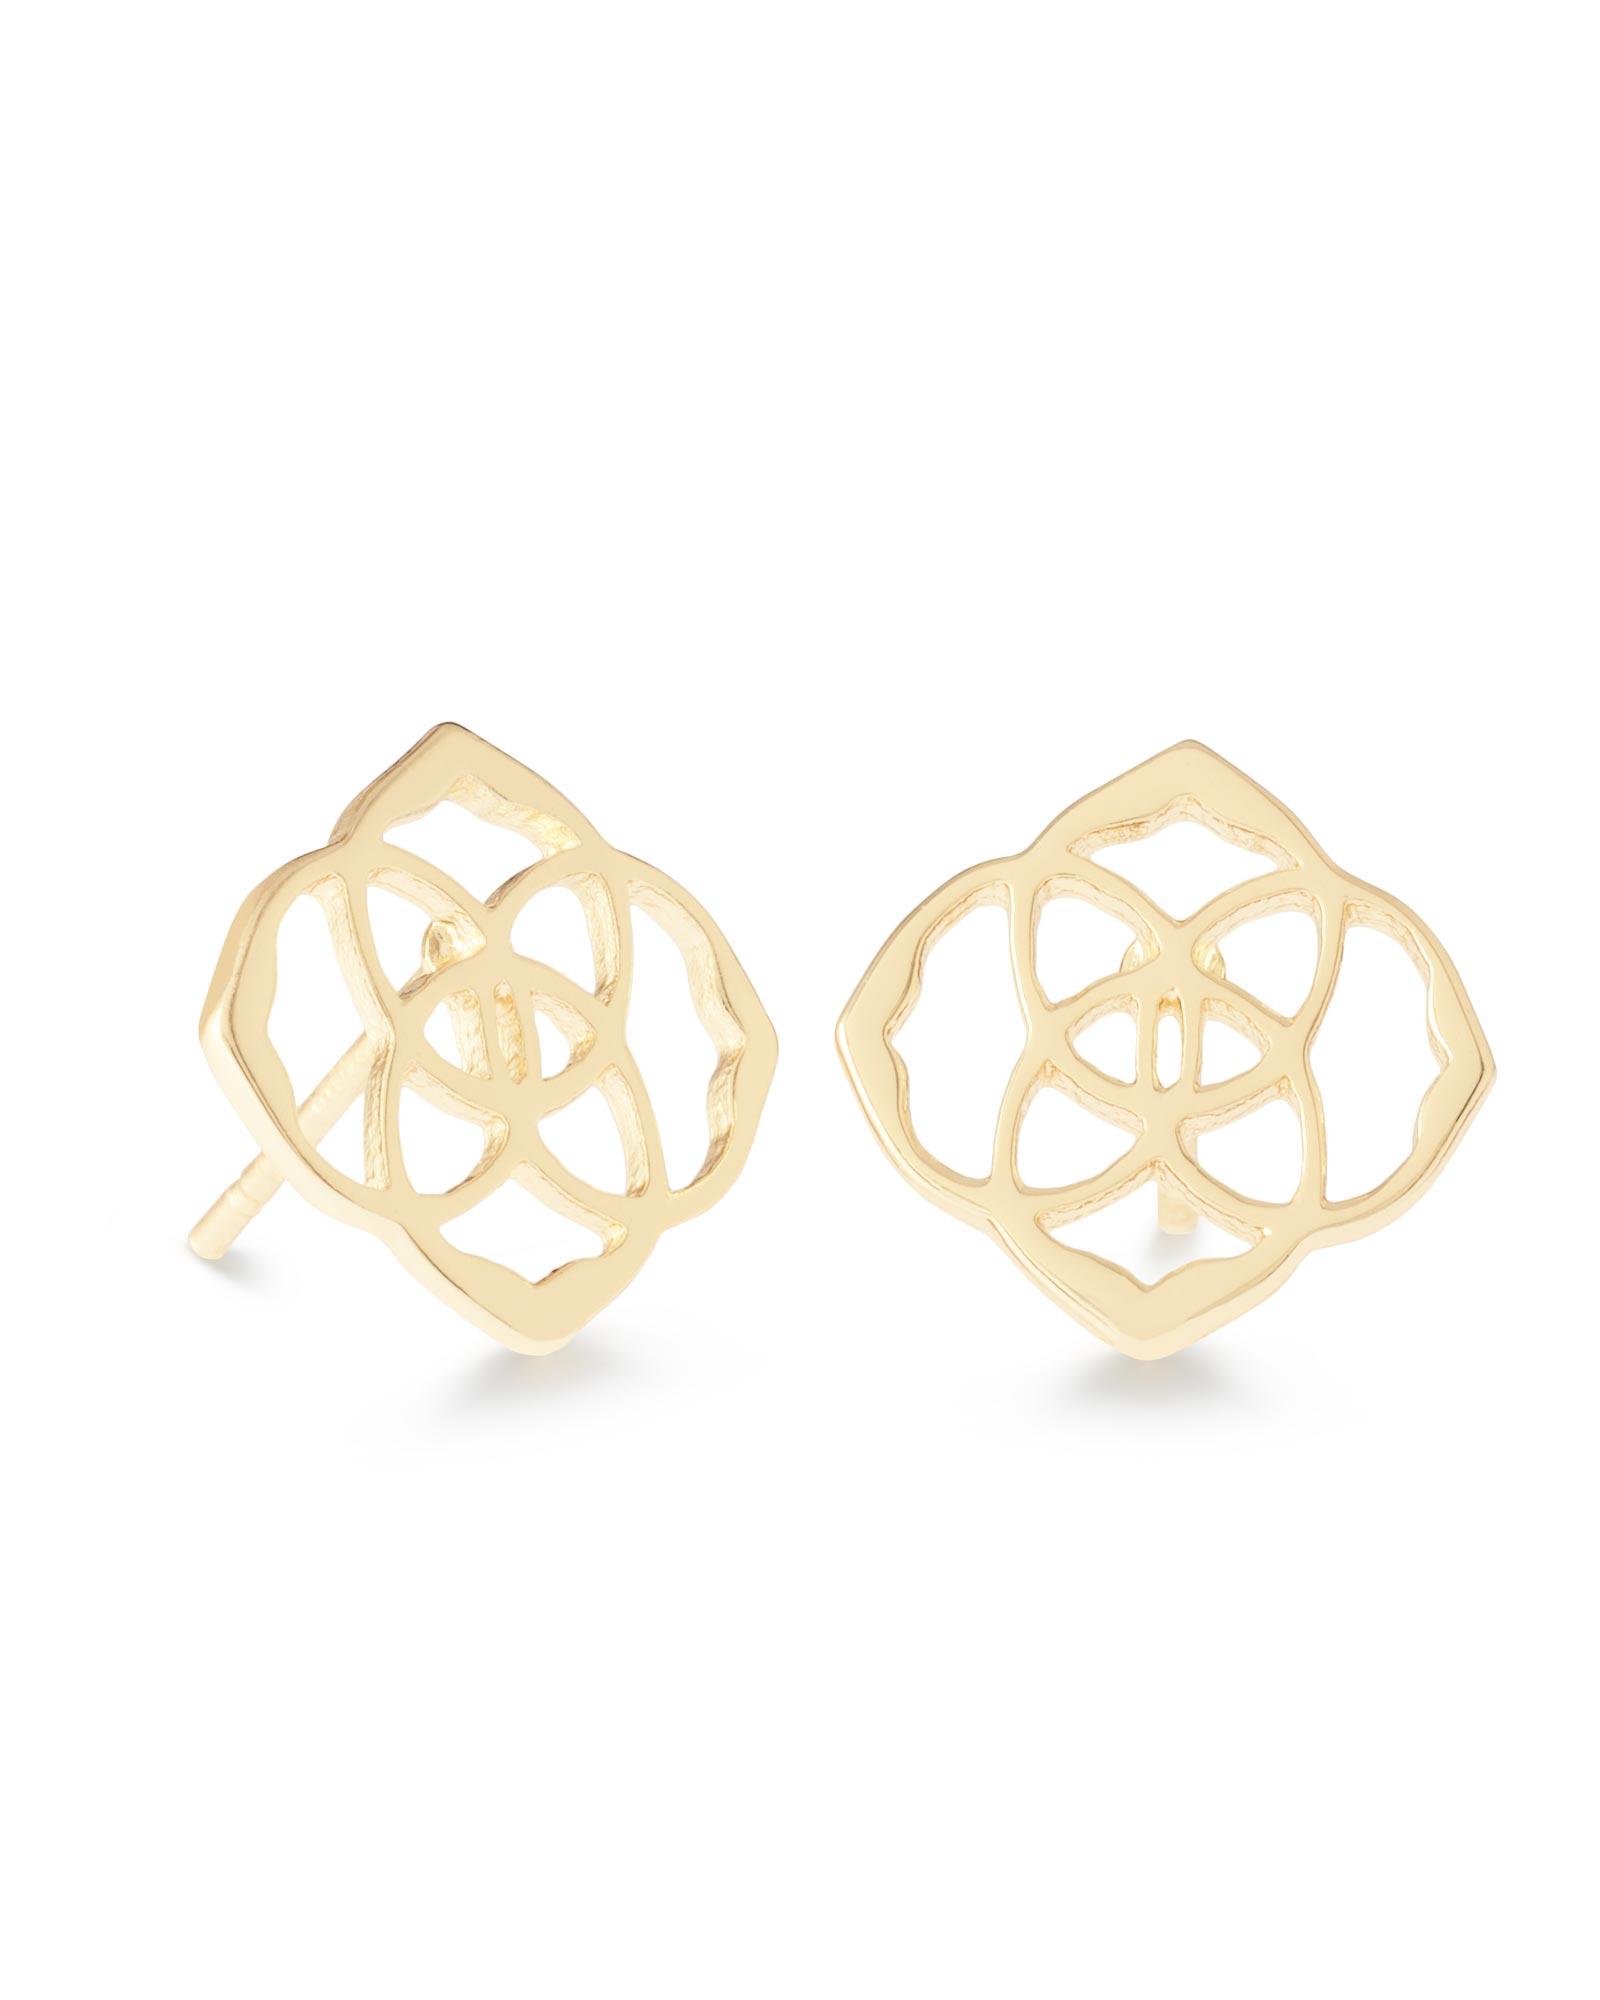 Kendra Scott Logo - Dira Stud Earrings in Gold Filigree | Kendra Scott Jewelry